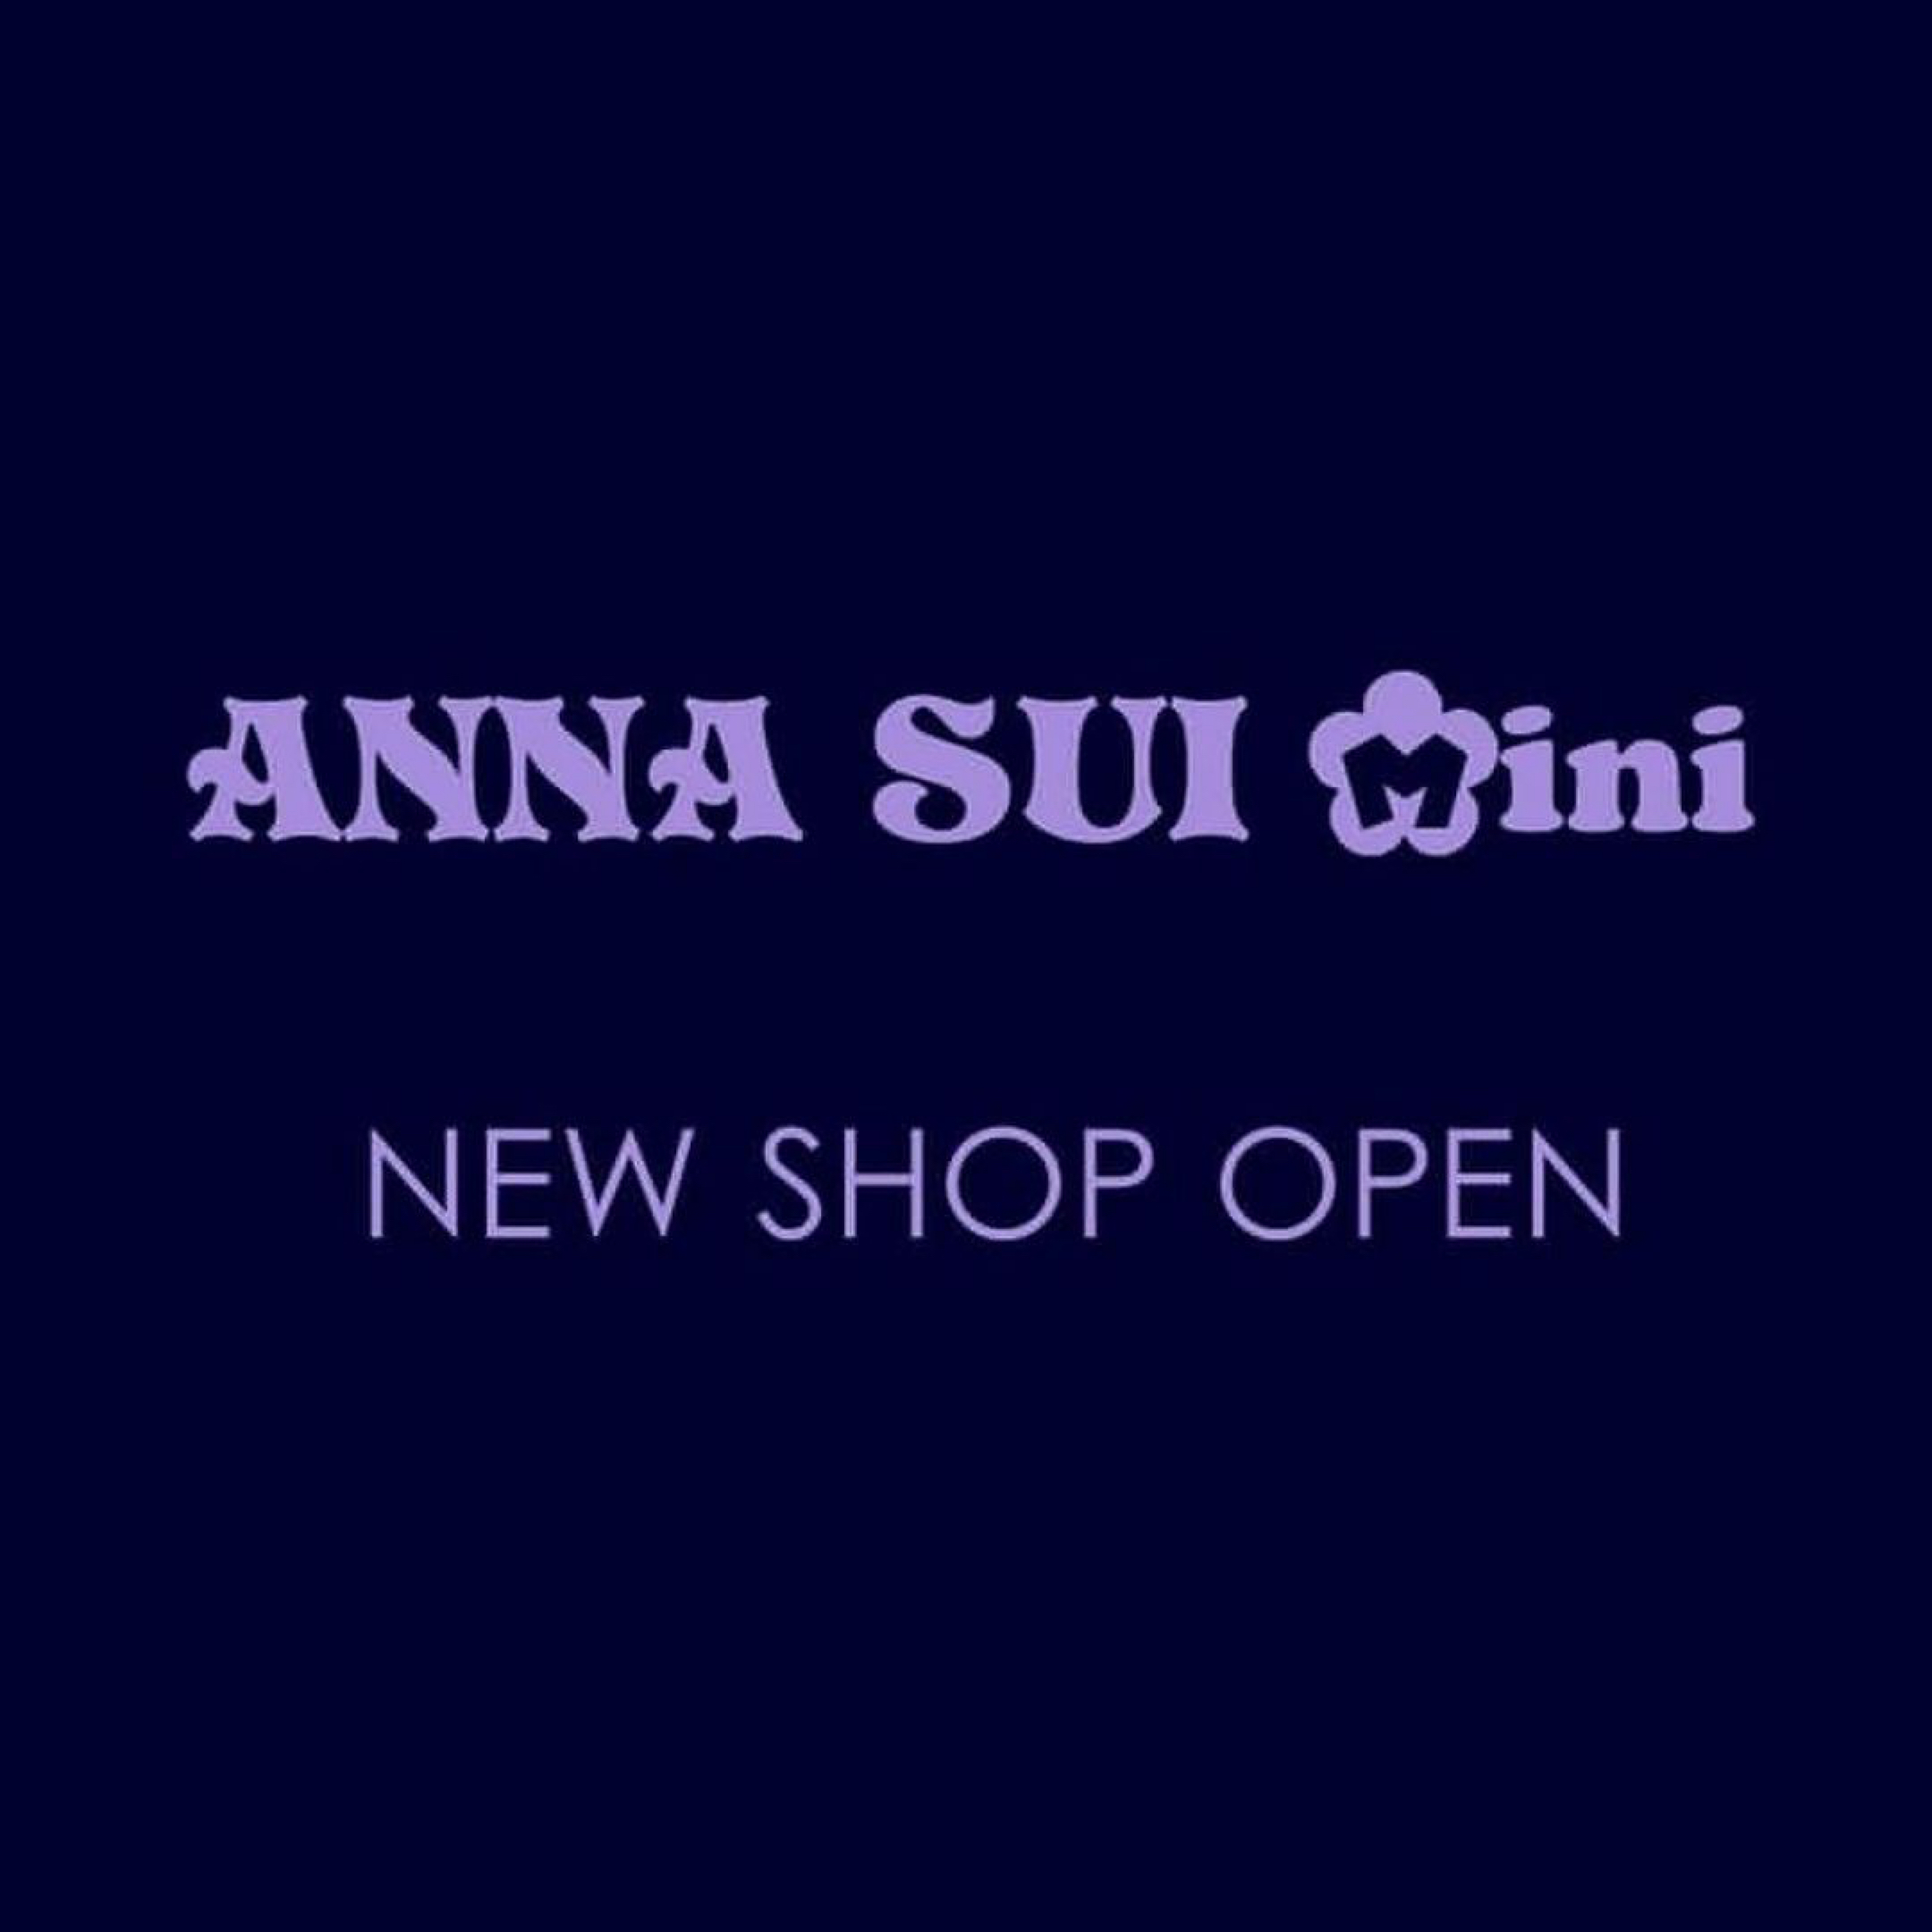 【NEW SHOP OPEN】4月18日(木) 東急百貨店たまプラーザ店にアナ スイ・ミニの新店舗がオープン♪